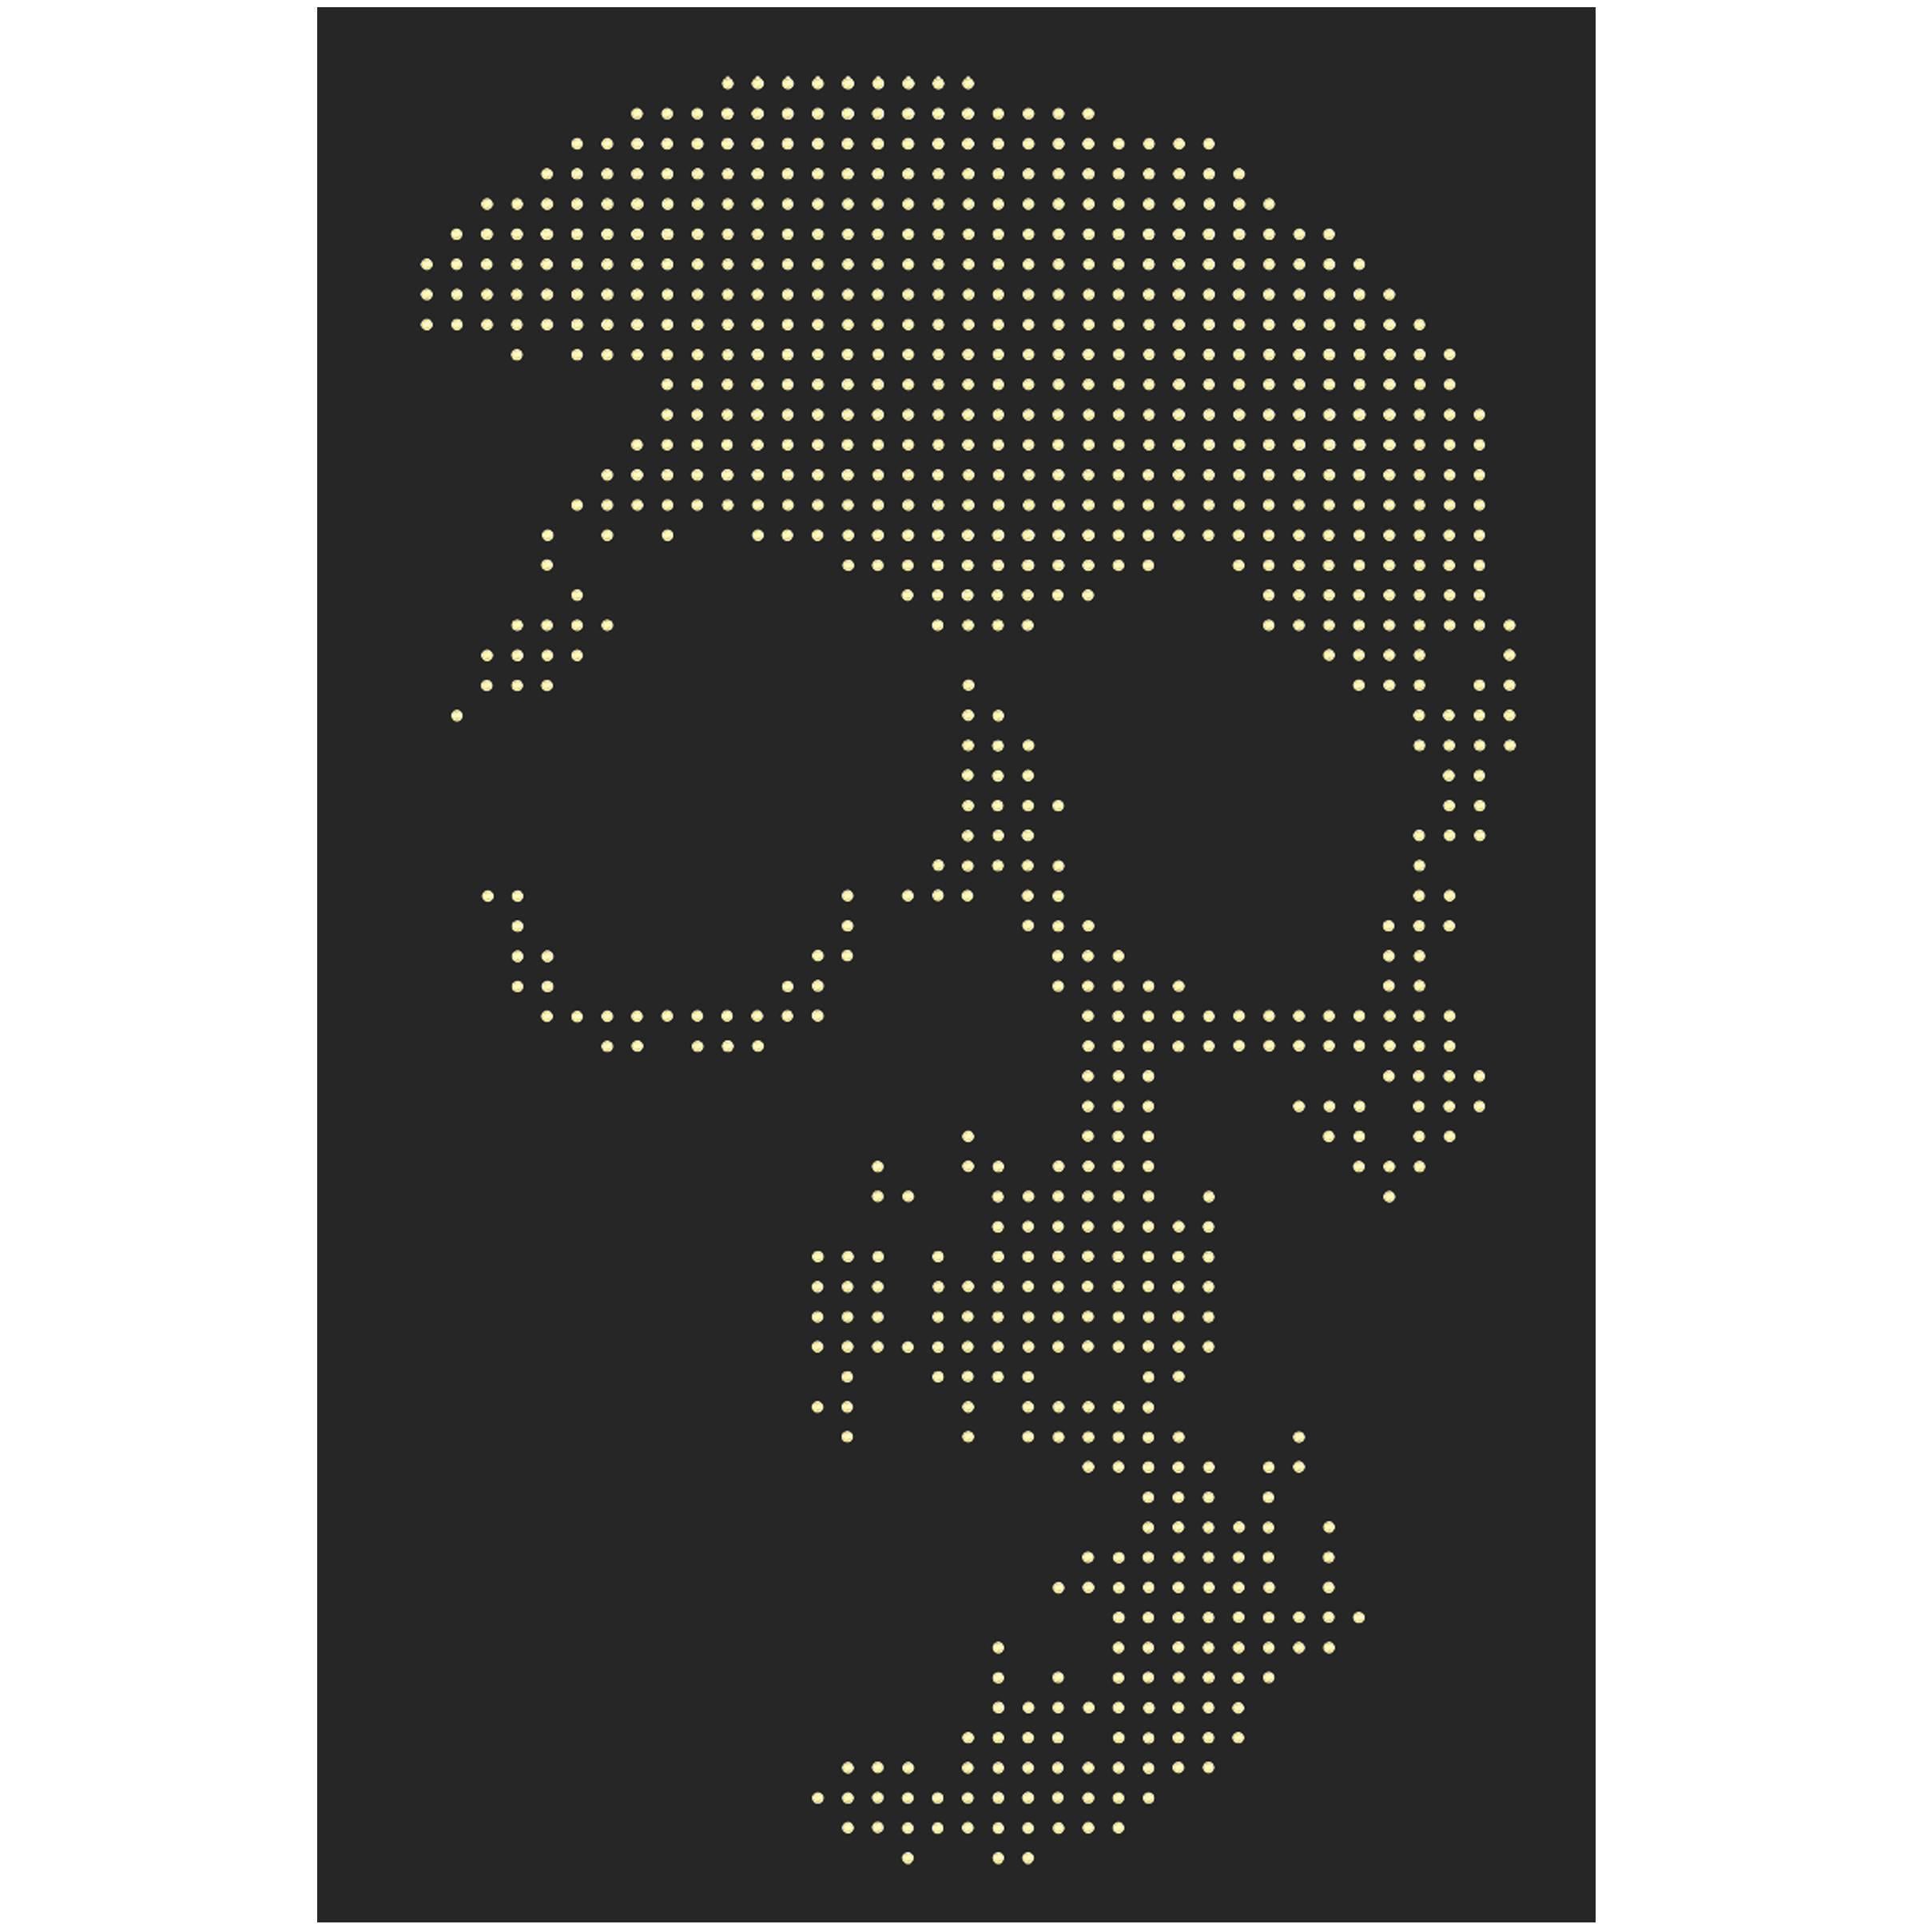 Skull Gun Bullets Panel in Black Plexiglass Exceptional Piece, 2016